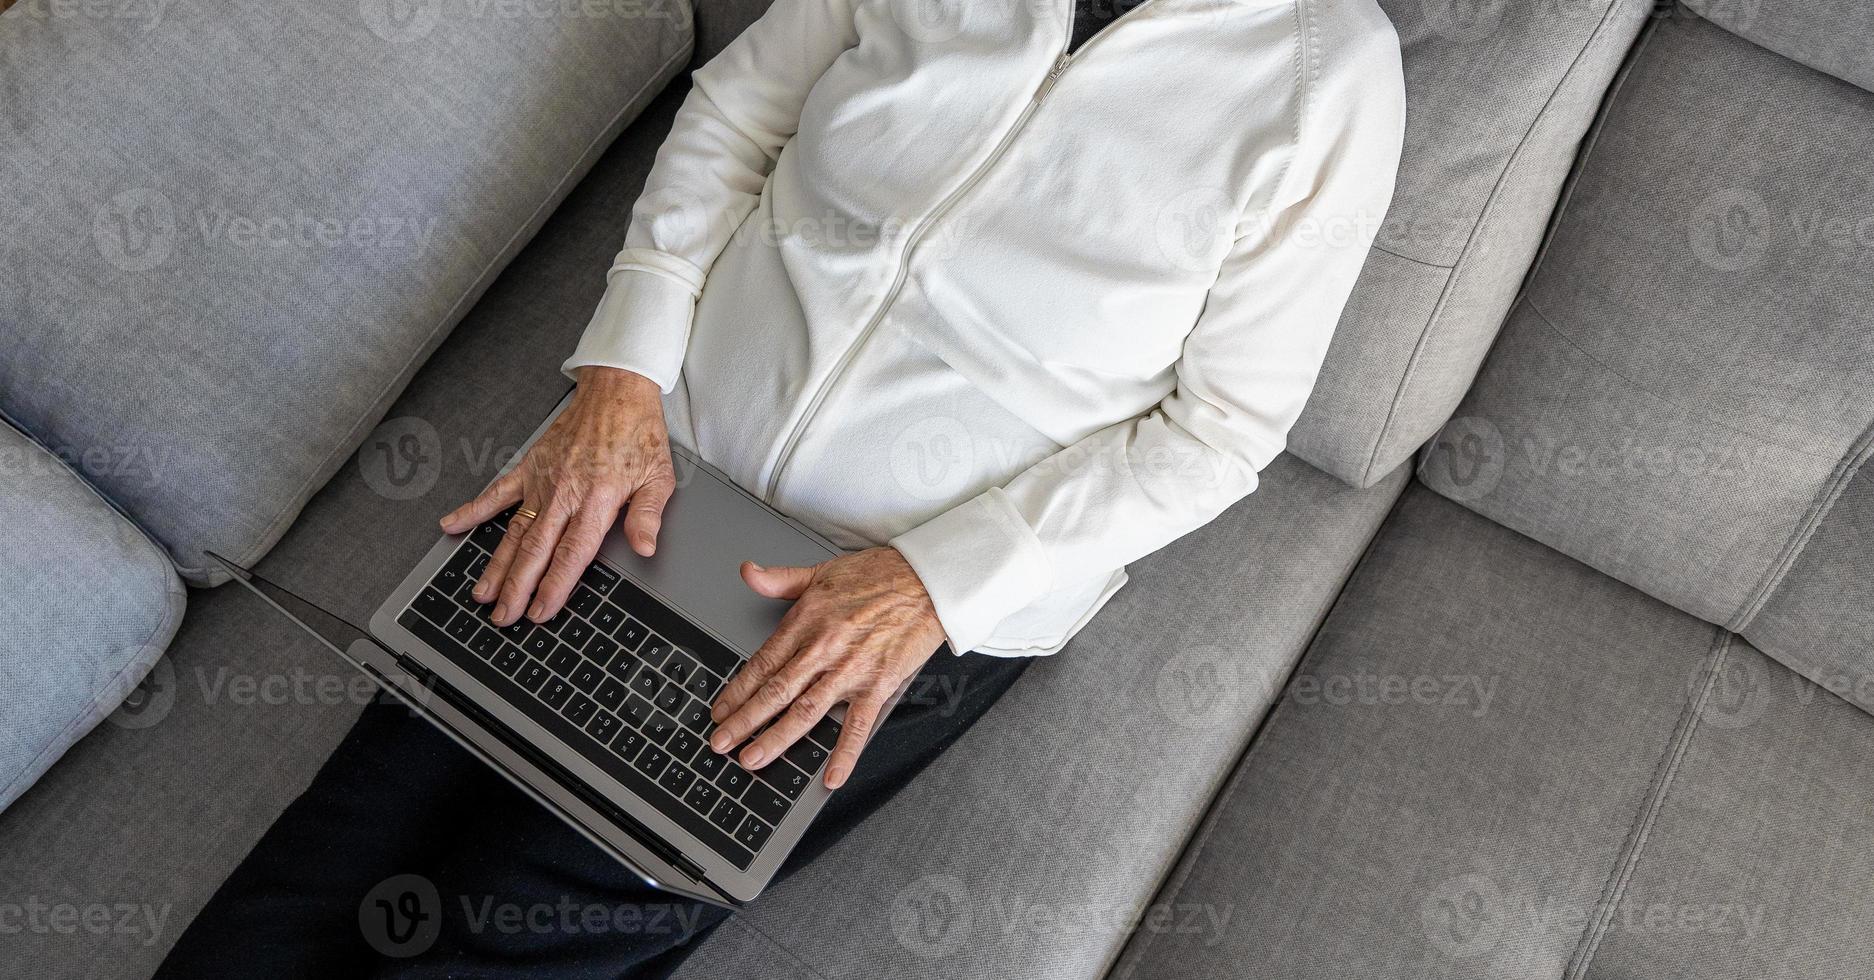 Calm senior woman browsing laptop in living room photo